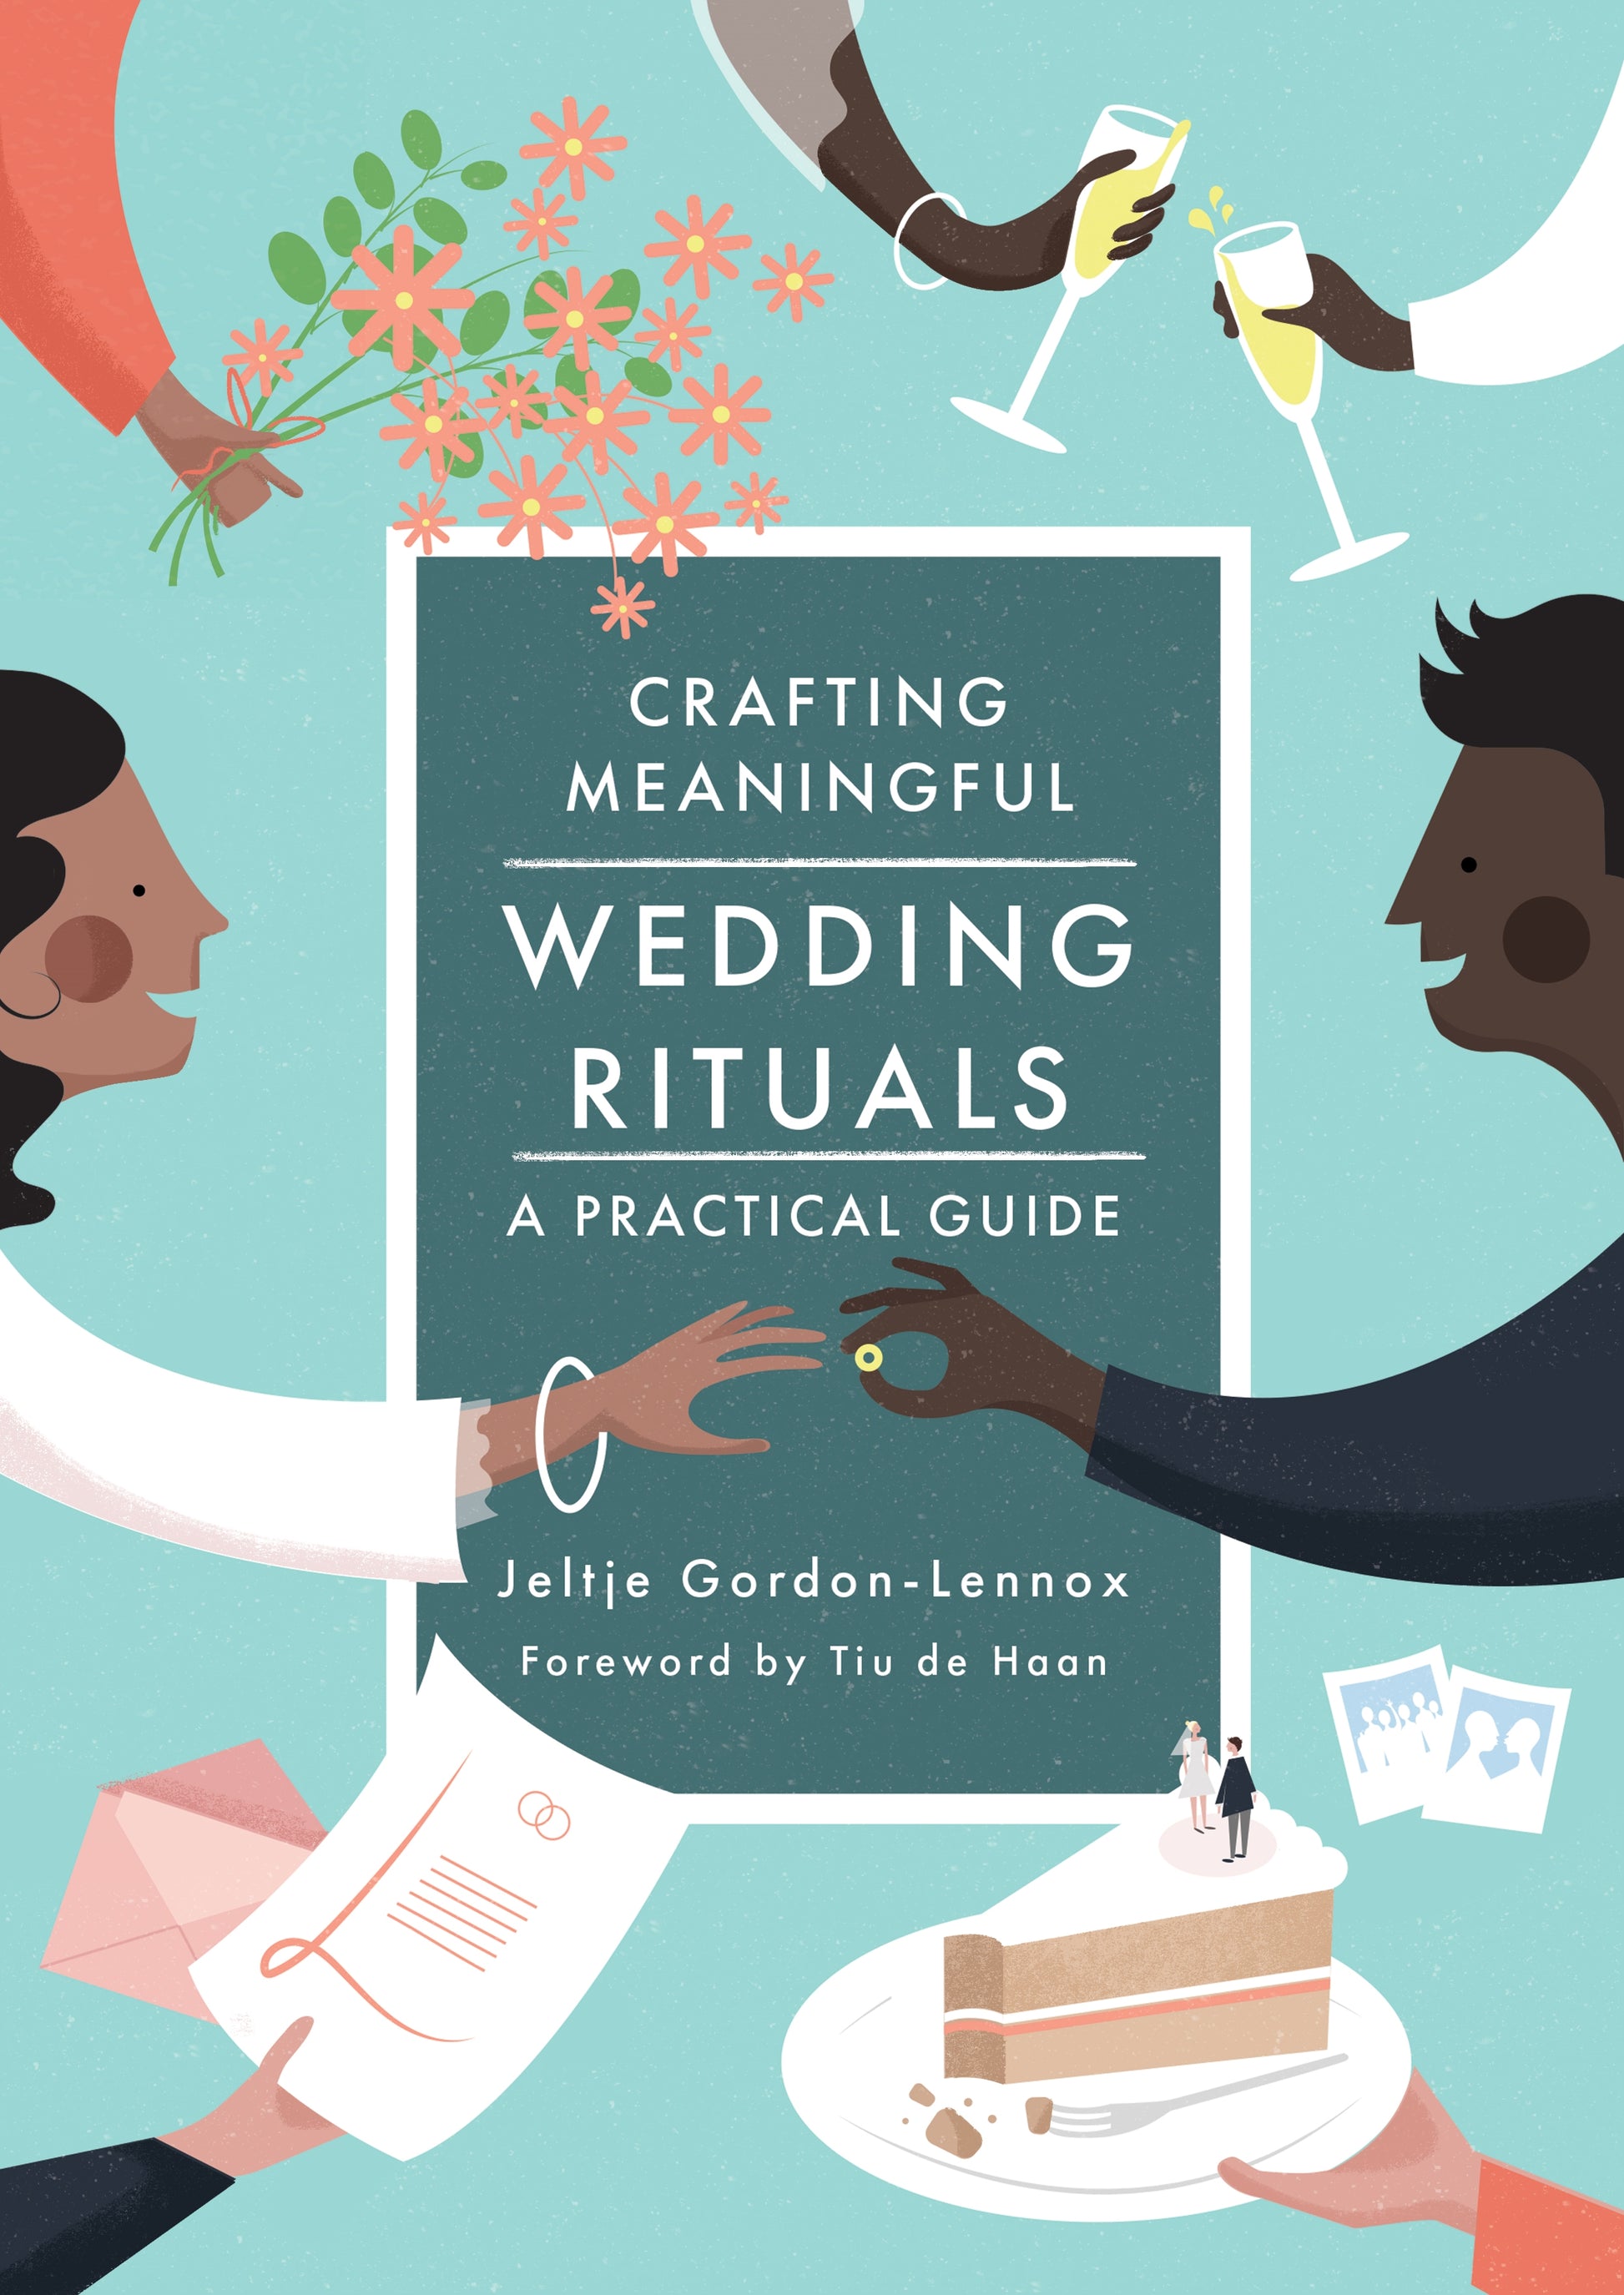 Crafting Meaningful Wedding Rituals by Jeltje Gordon-Lennox, Tiu de Haan